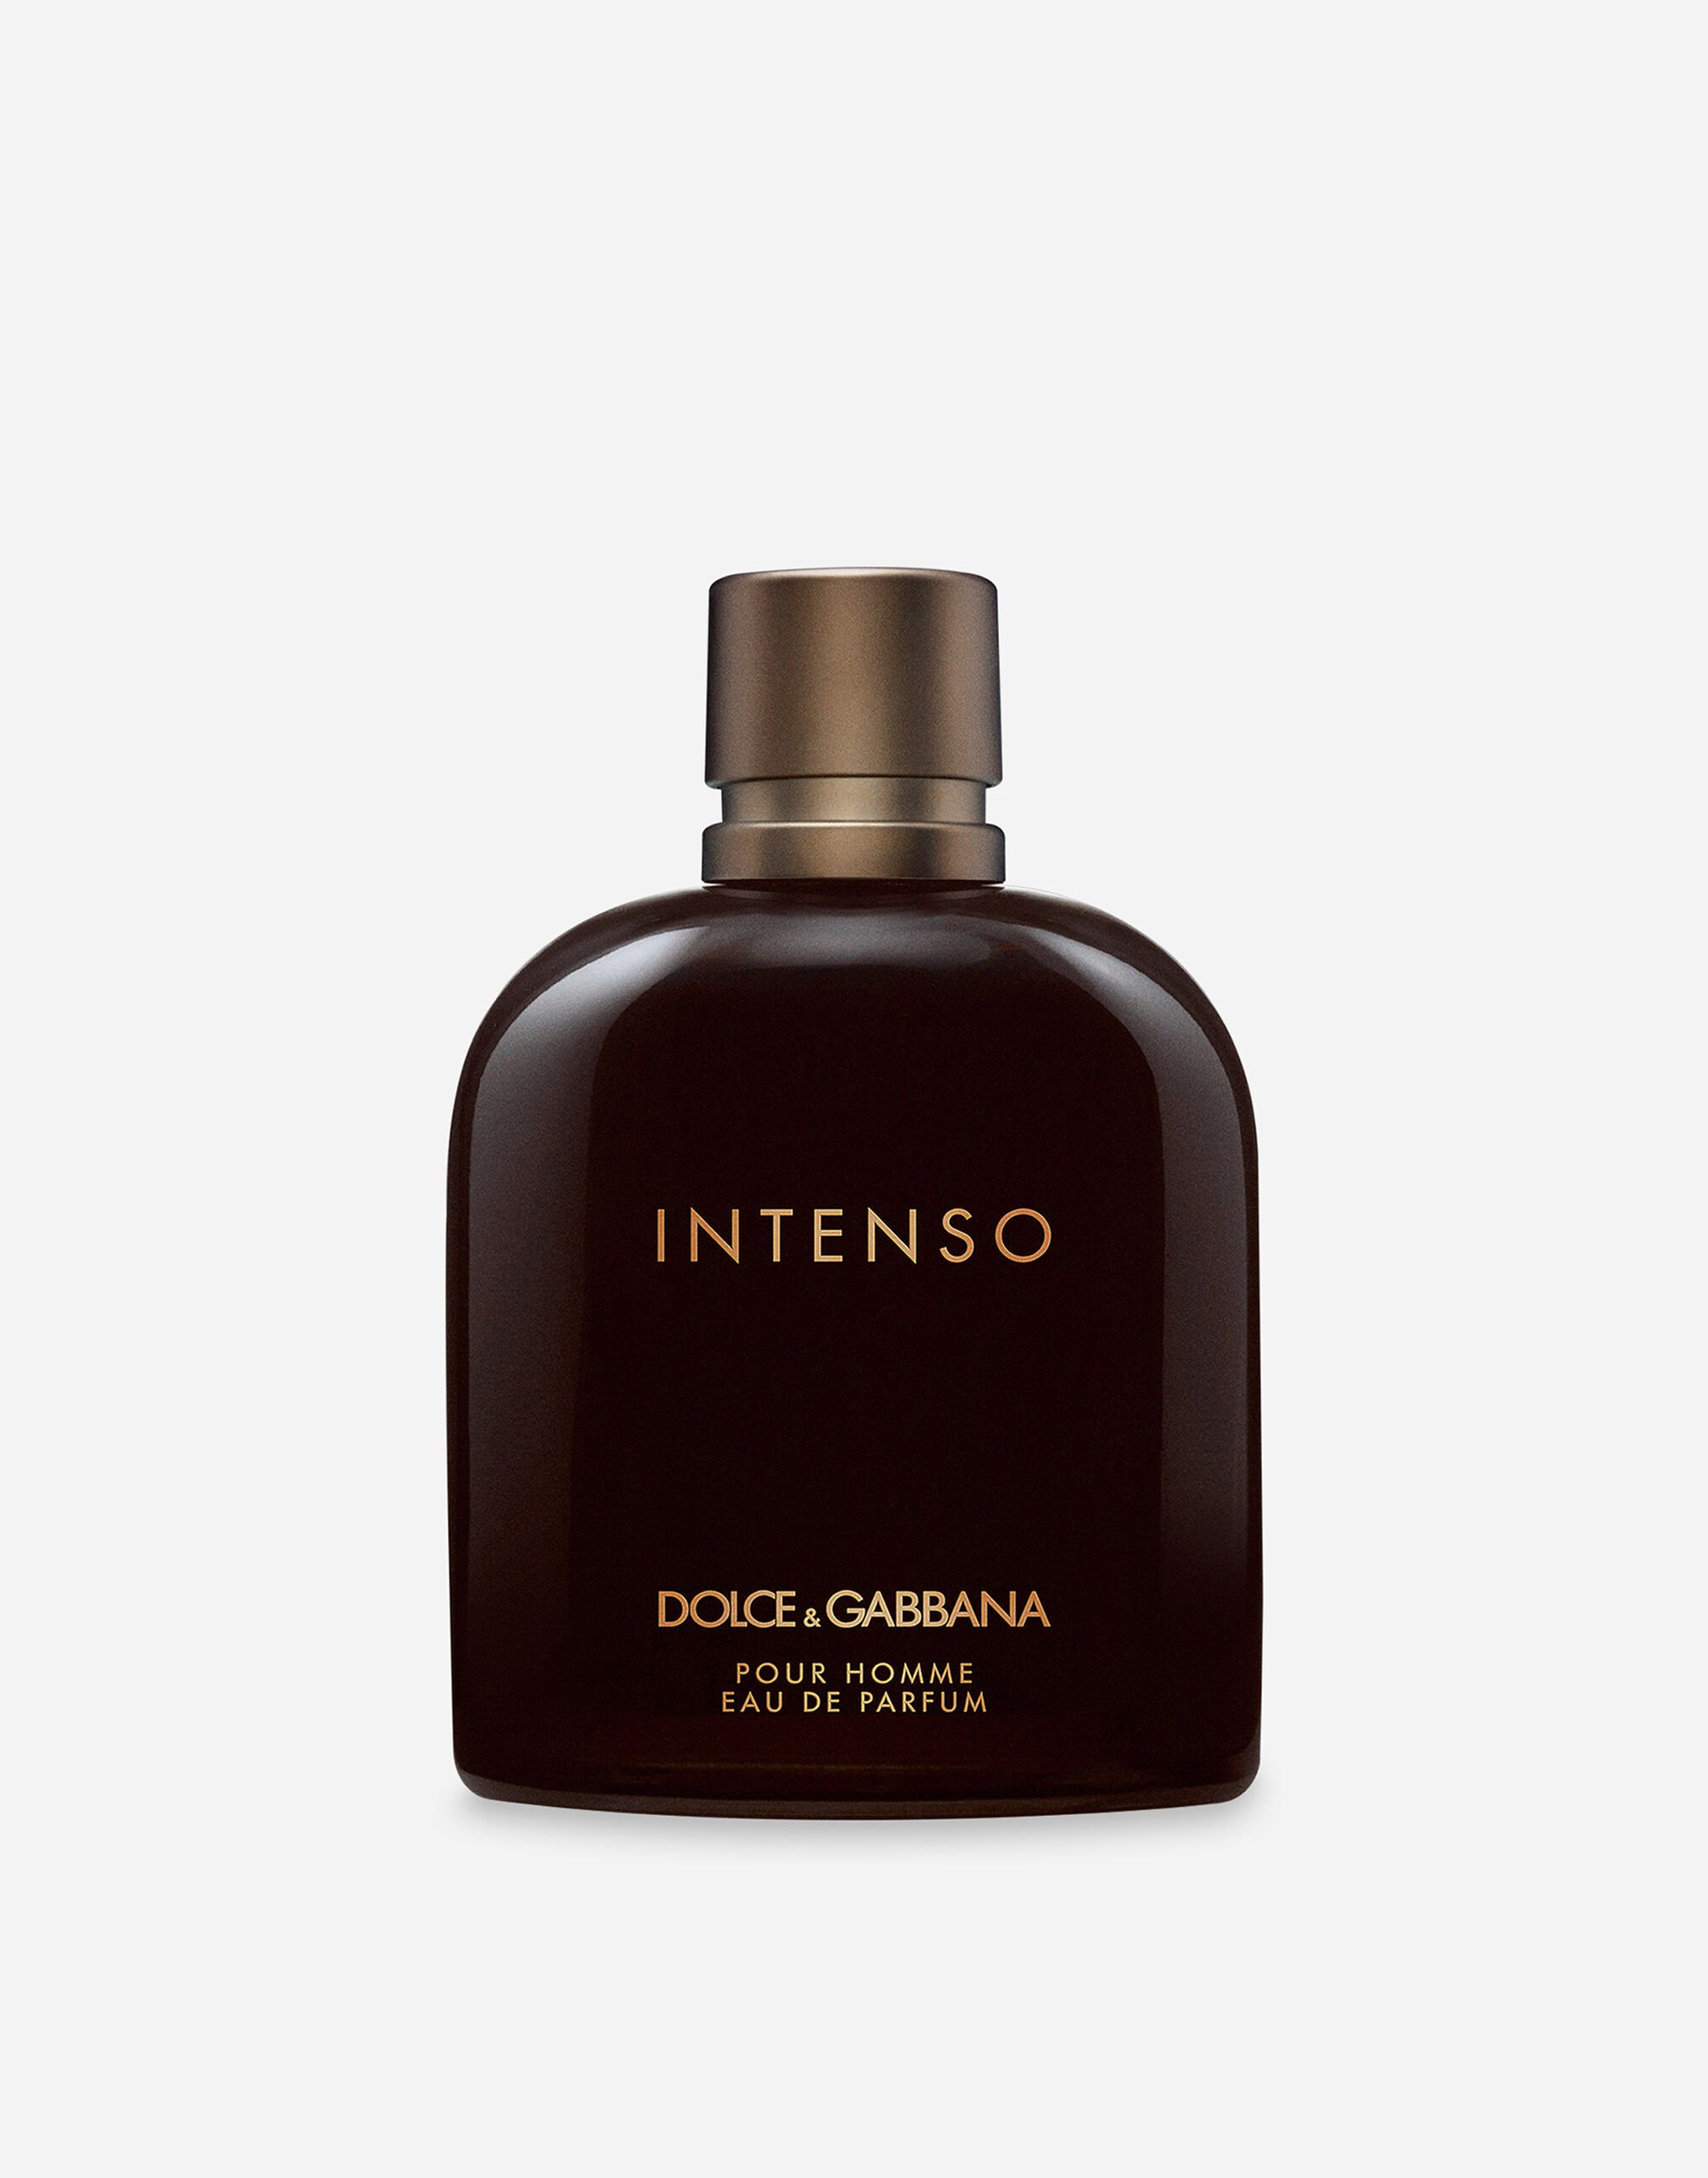 Dolce & Gabbana Intenso Eau de Parfum - VP6491VP107